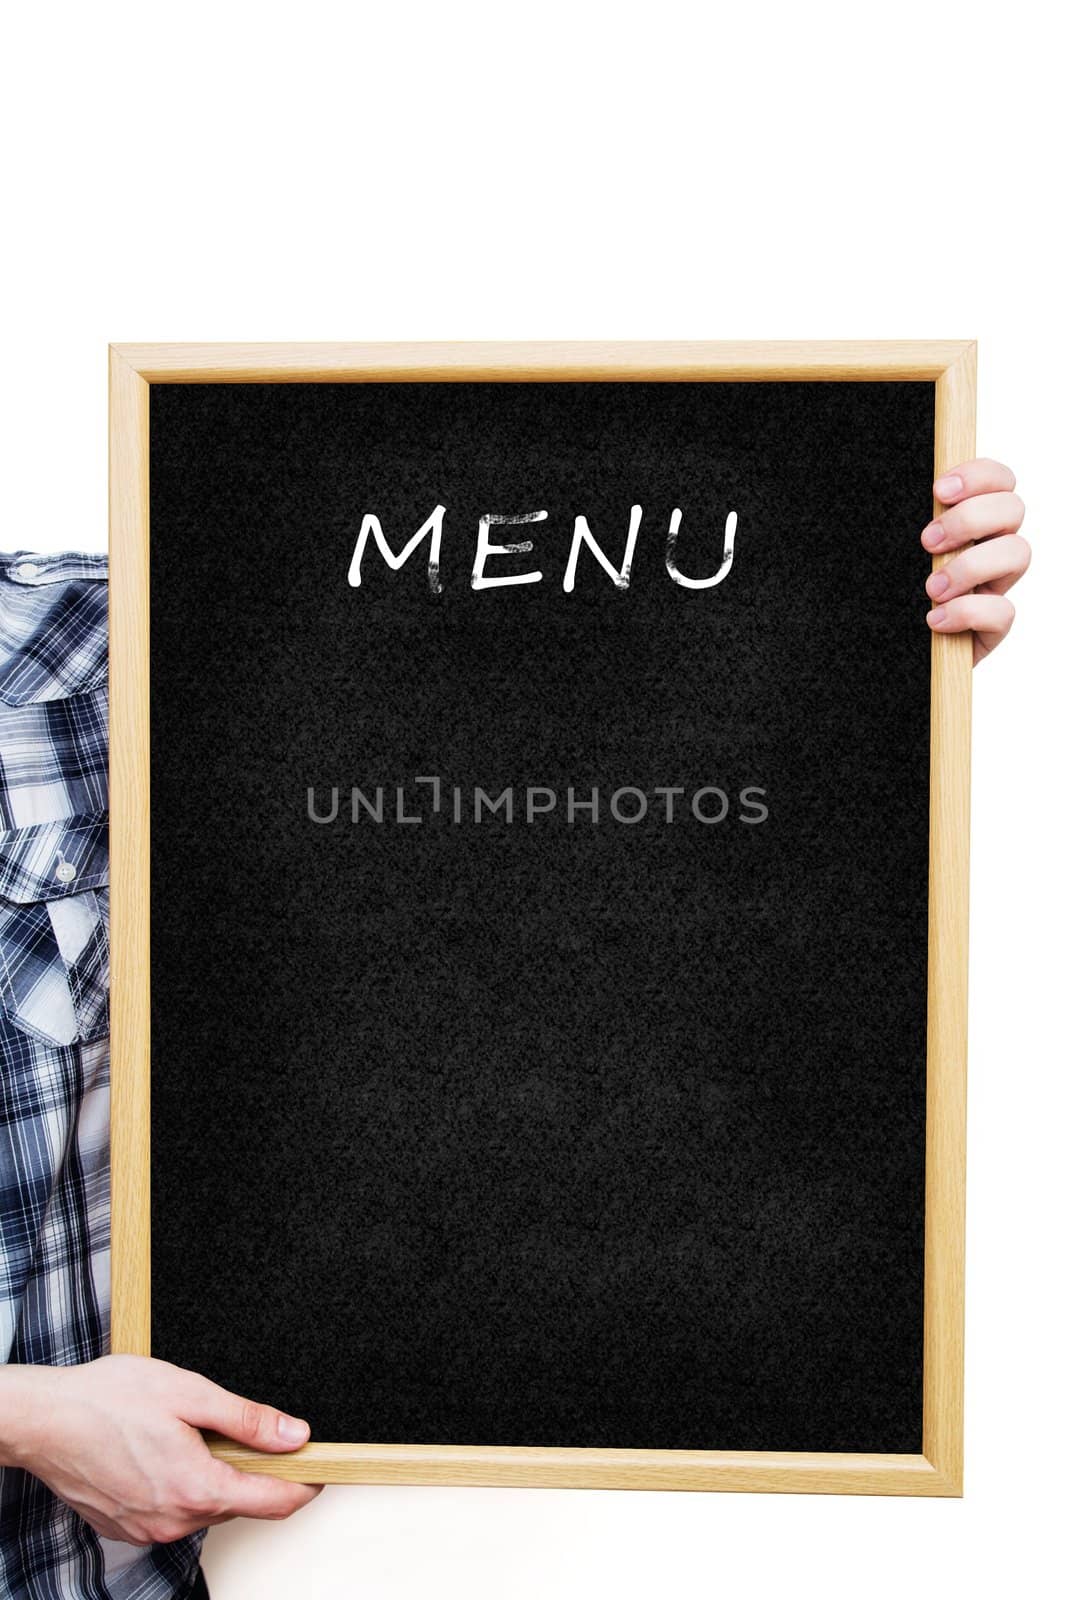 Man holding a blank black board, showing an empty menu  by simpson33